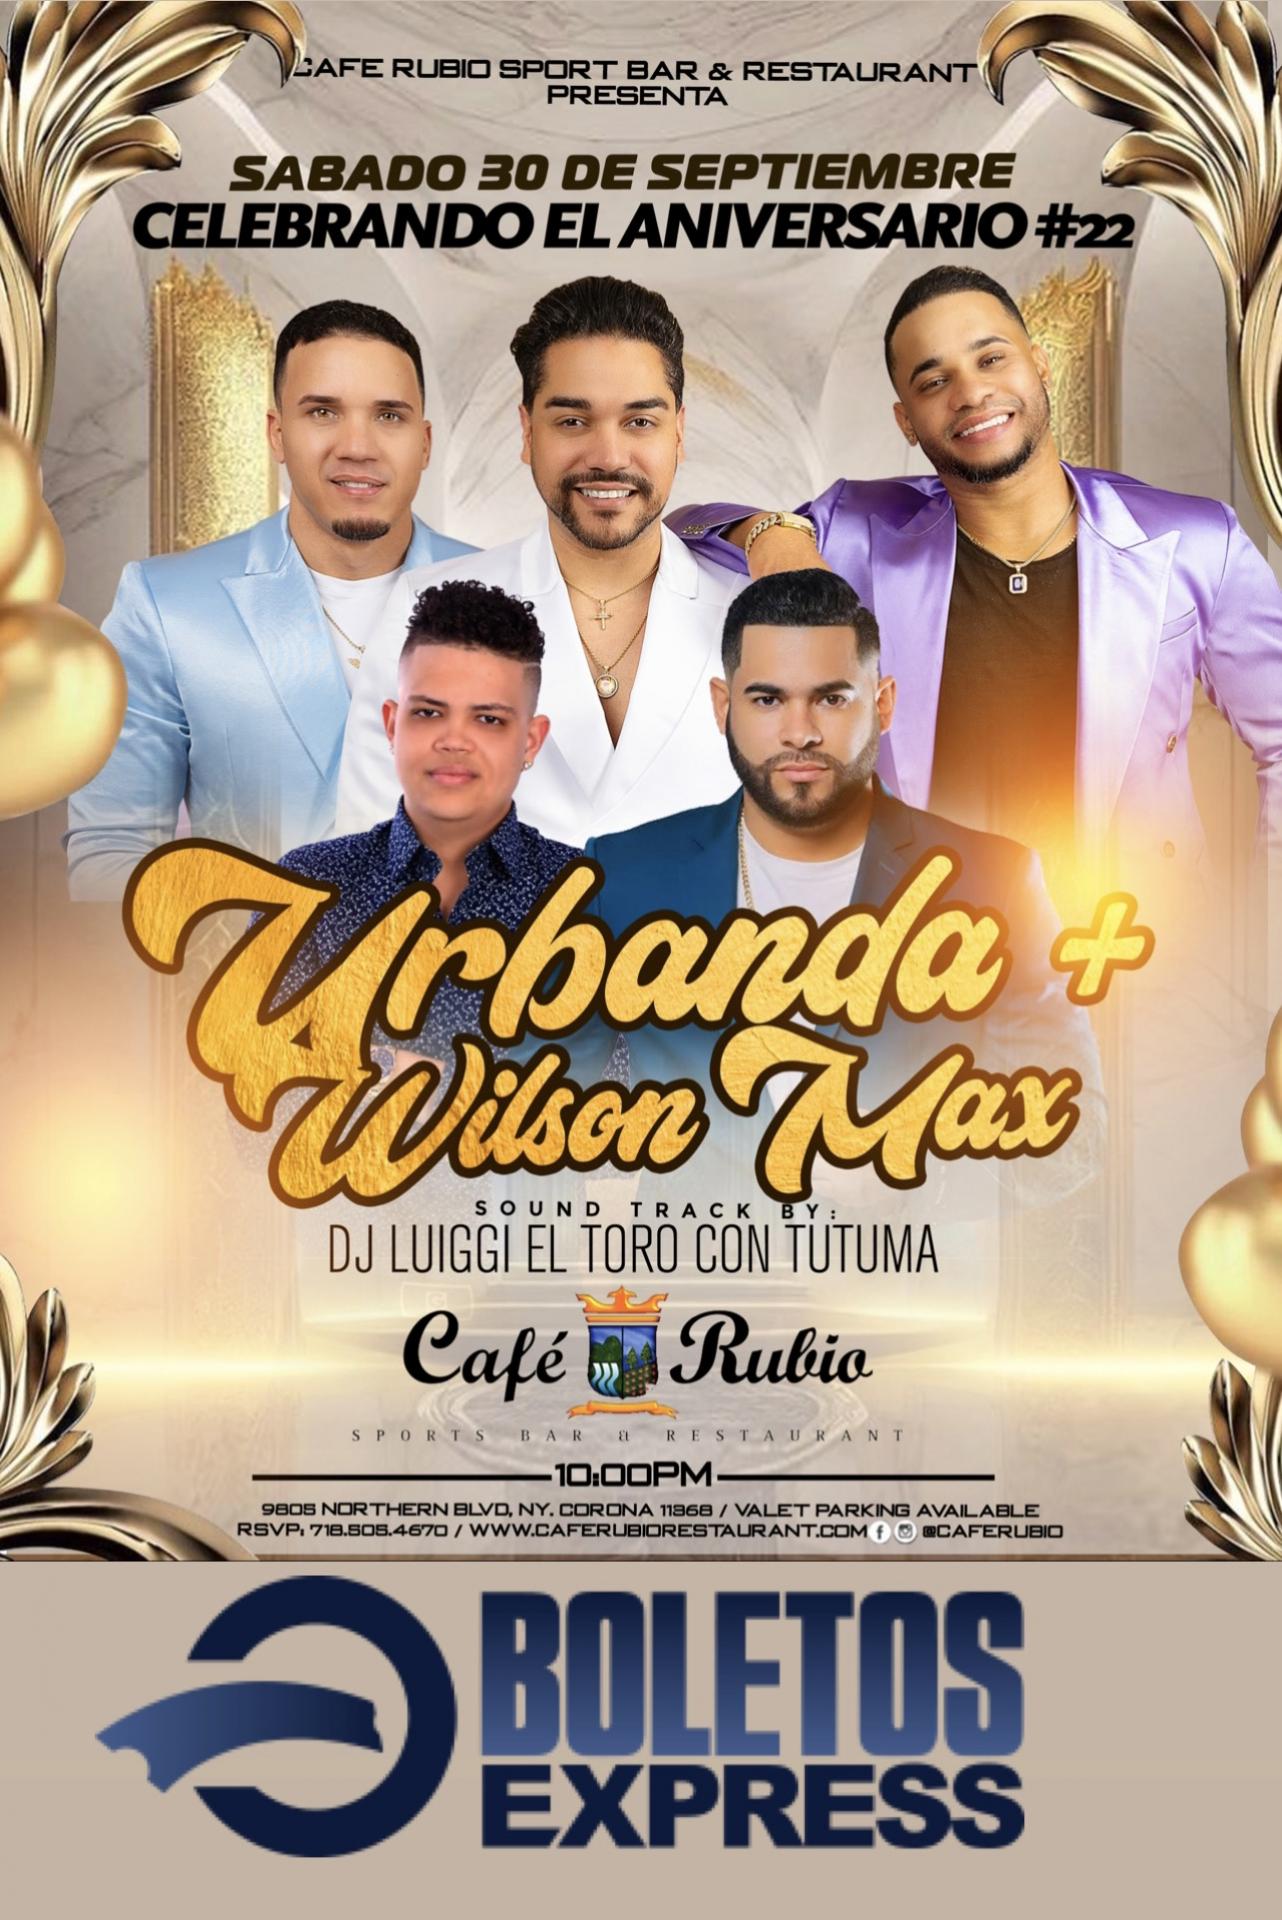 URBANDA & WILSON MAX CAFE RUBIO